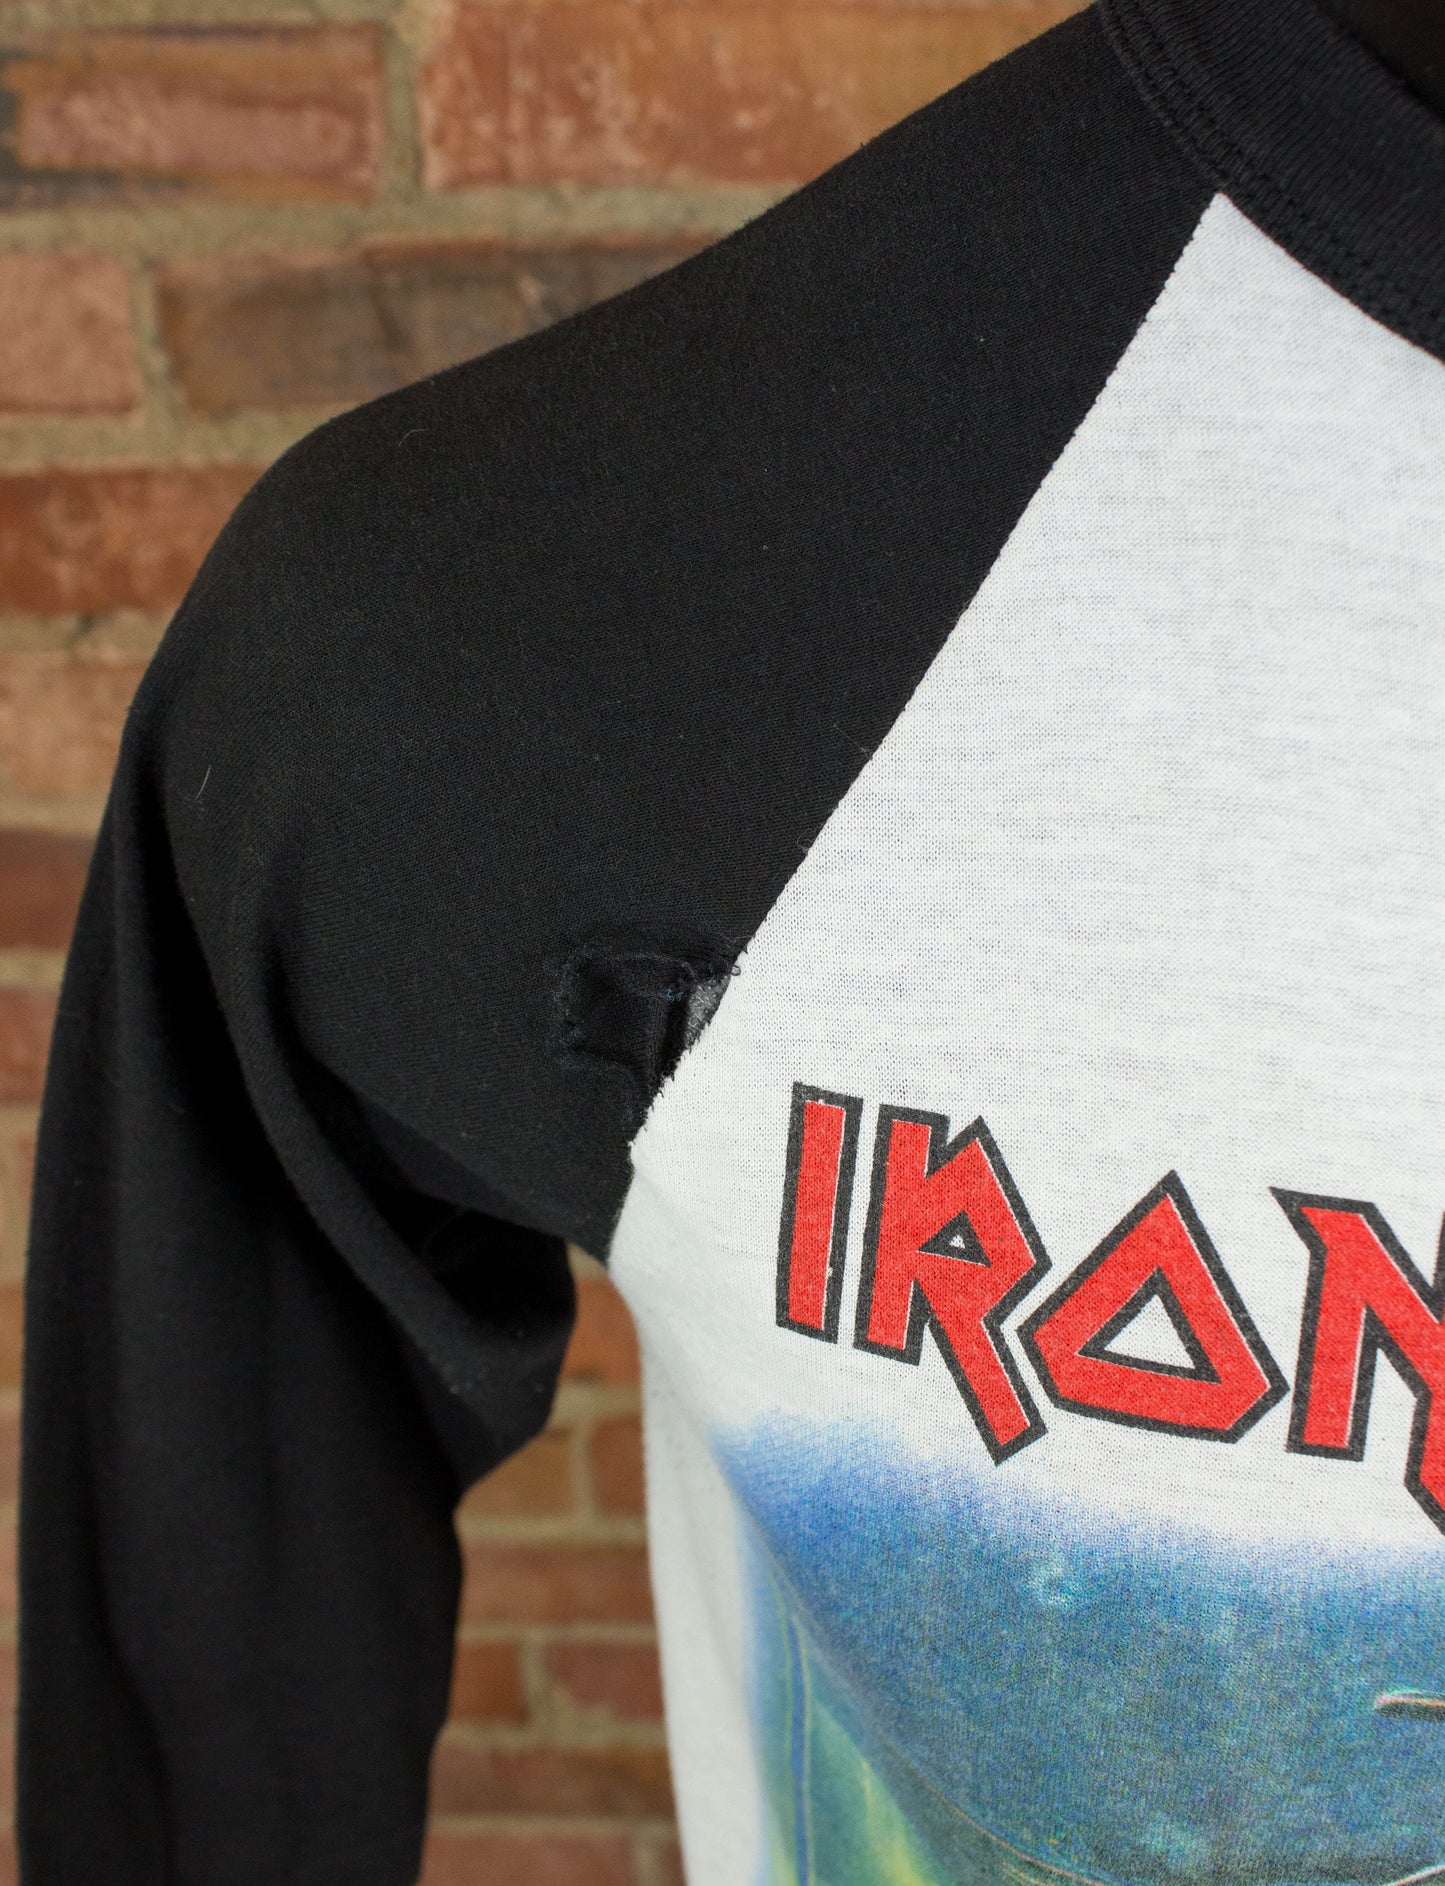 Vintage Iron Maiden Concert T Shirt 1987 Make My Day Black and White Raglan Jersey Small-Medium